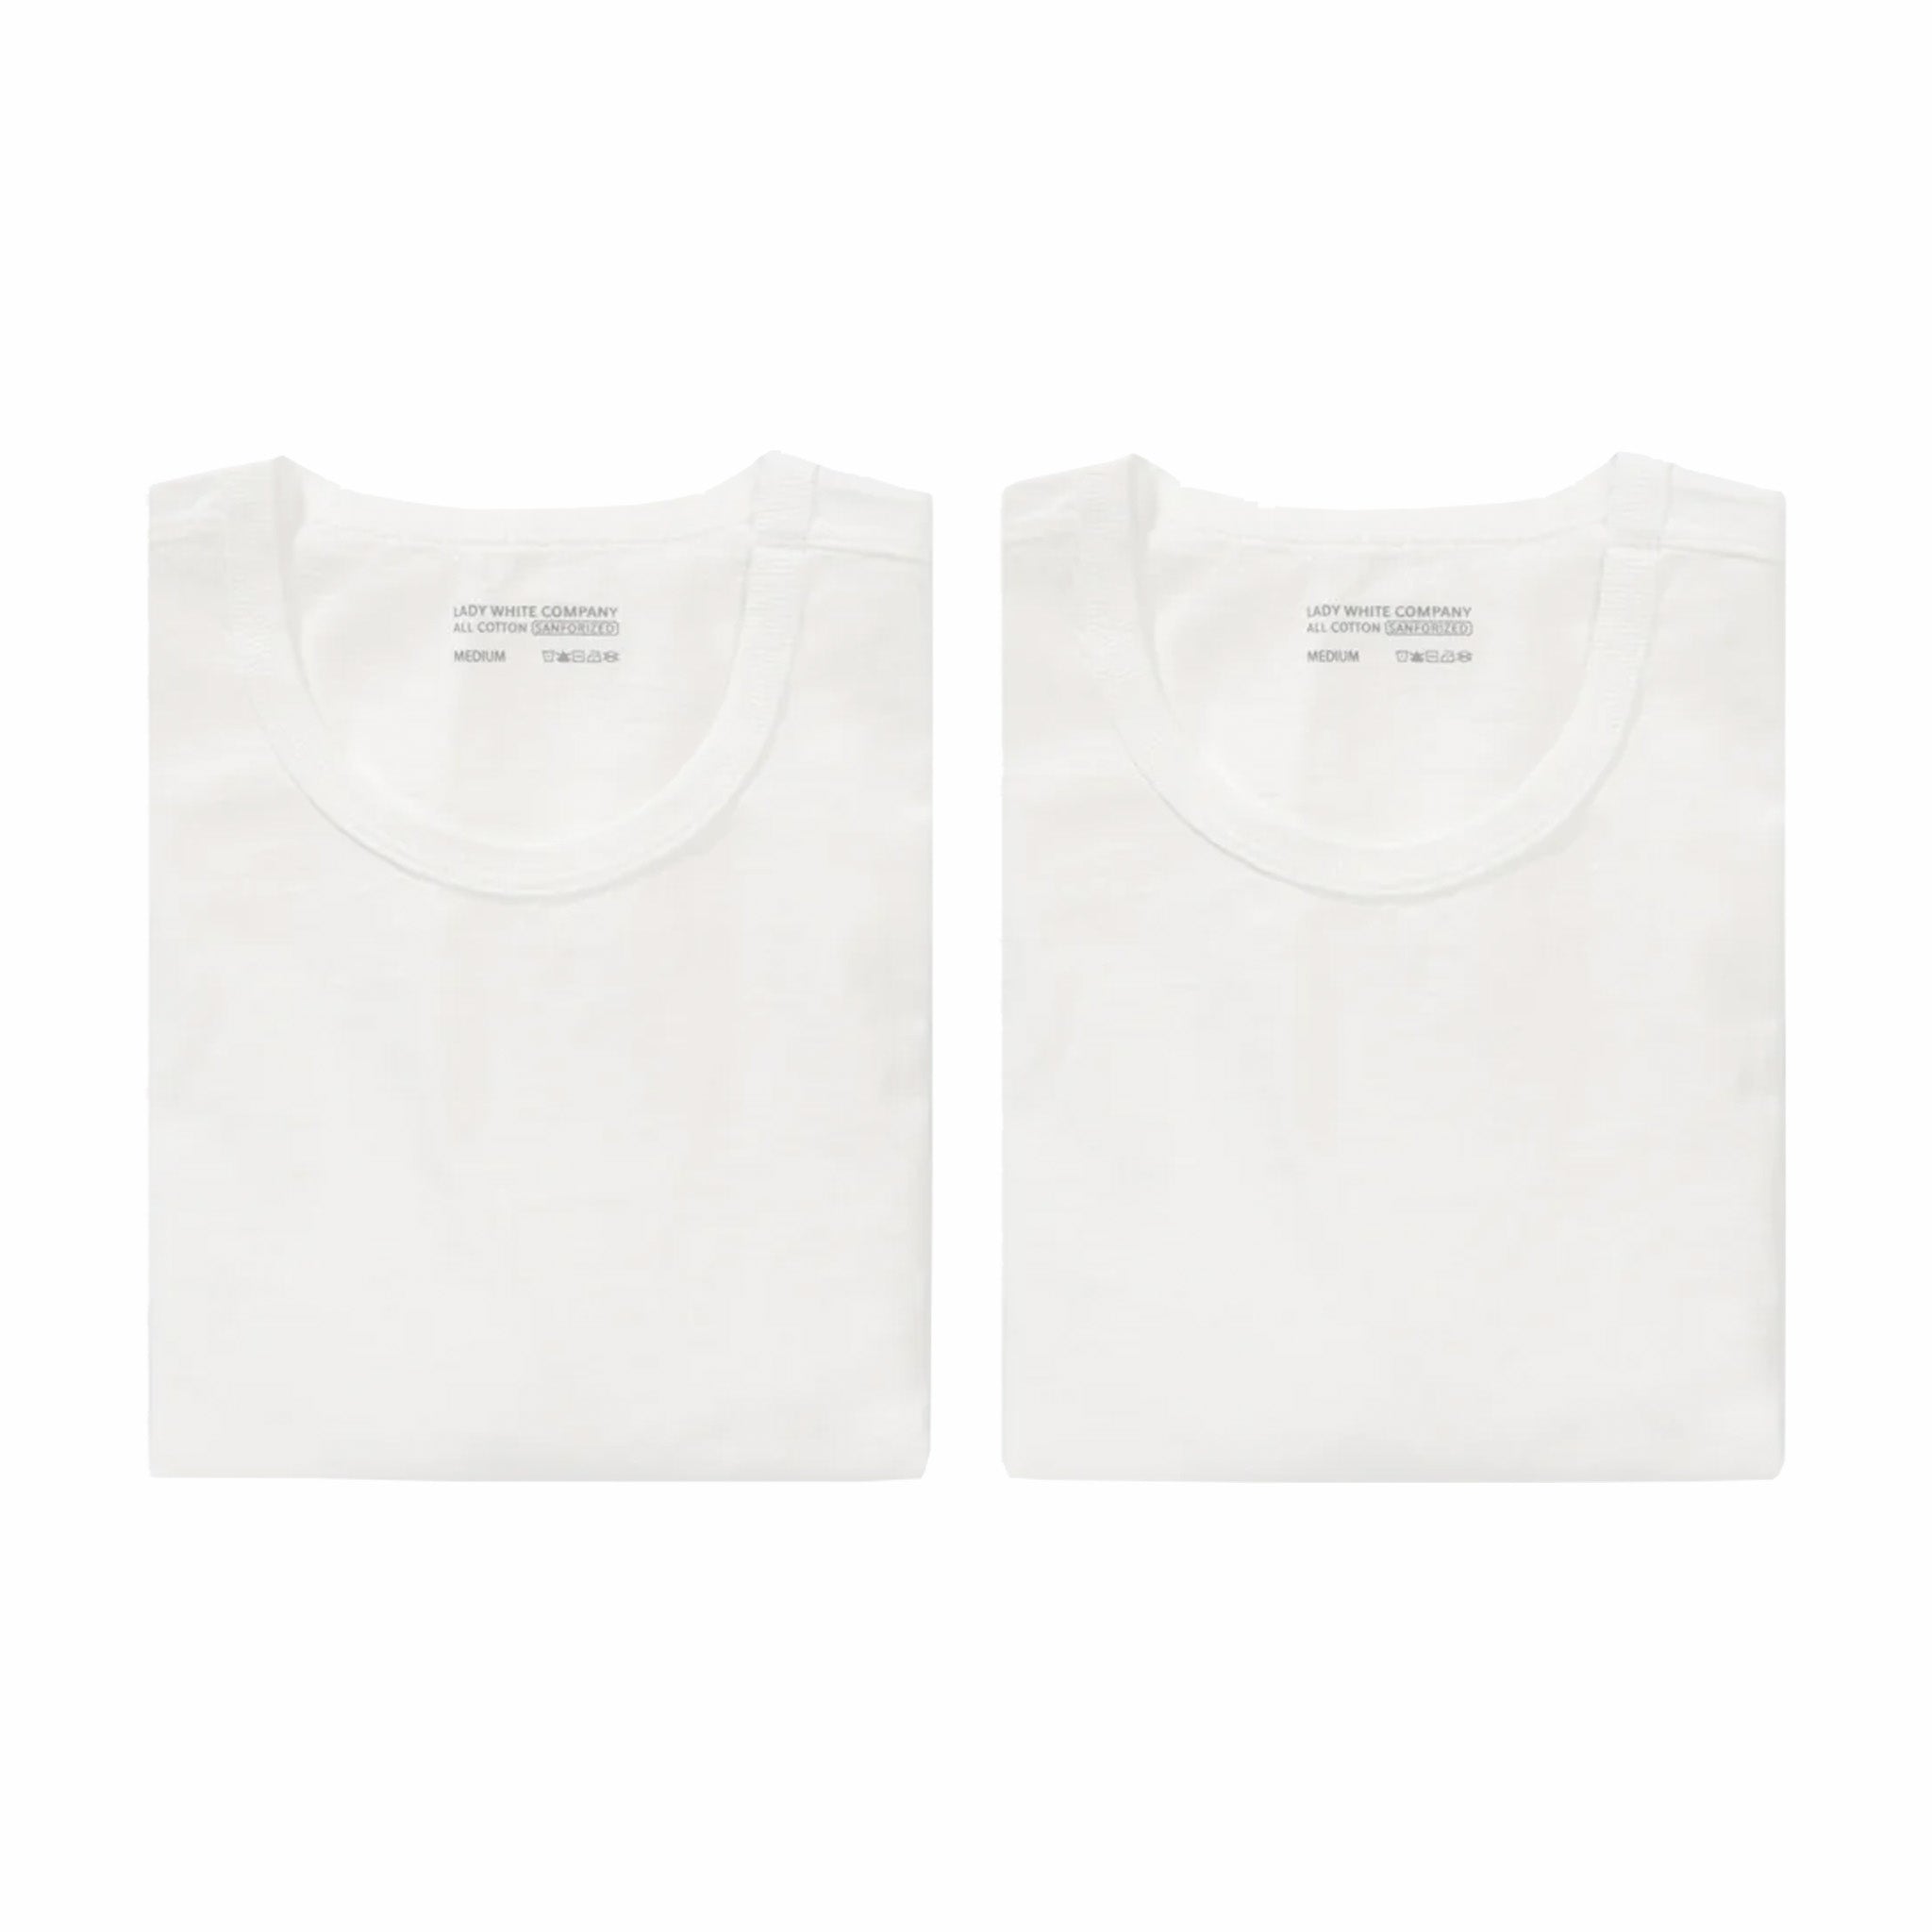 Lady White Co. Tubular T-Shirt 2-Pack (White) - August Shop